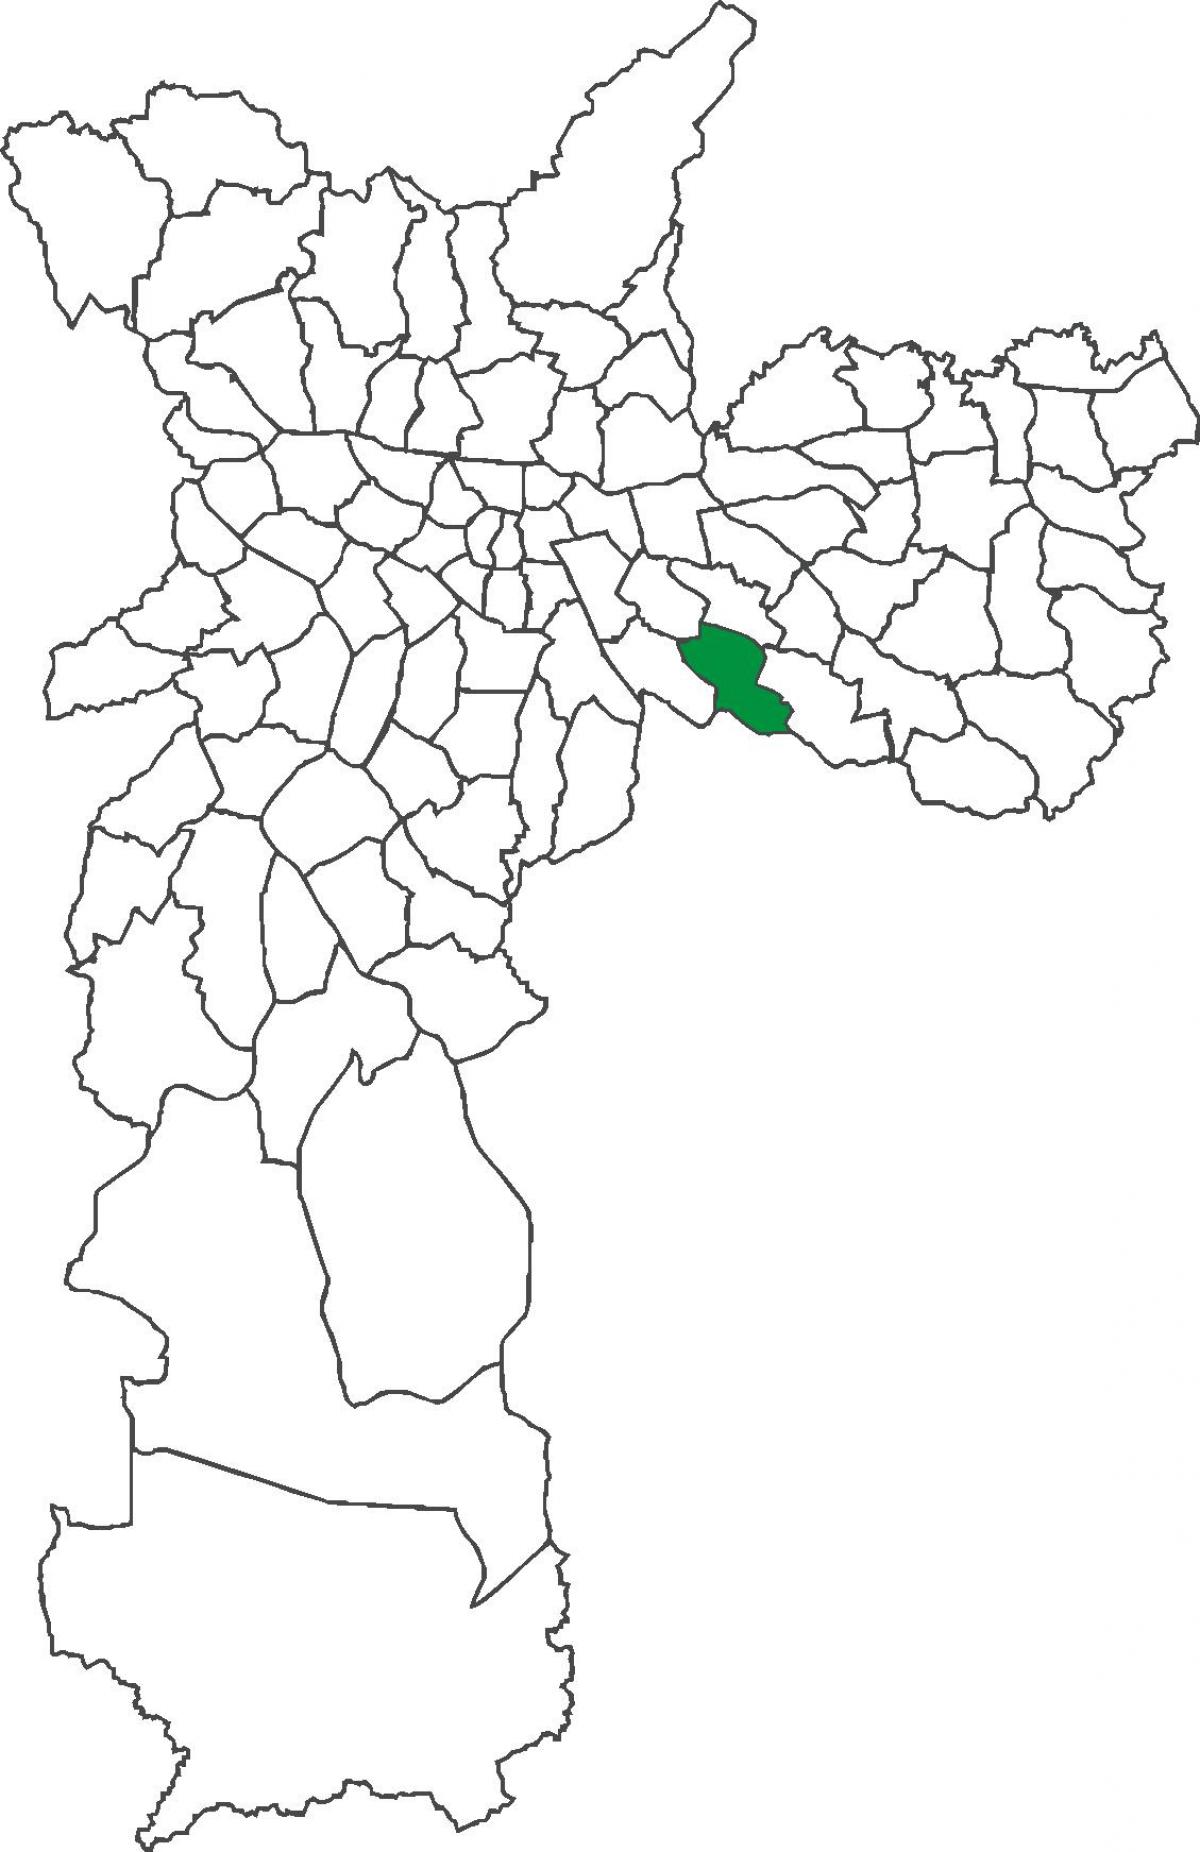 Mapa de San Lucas provincia